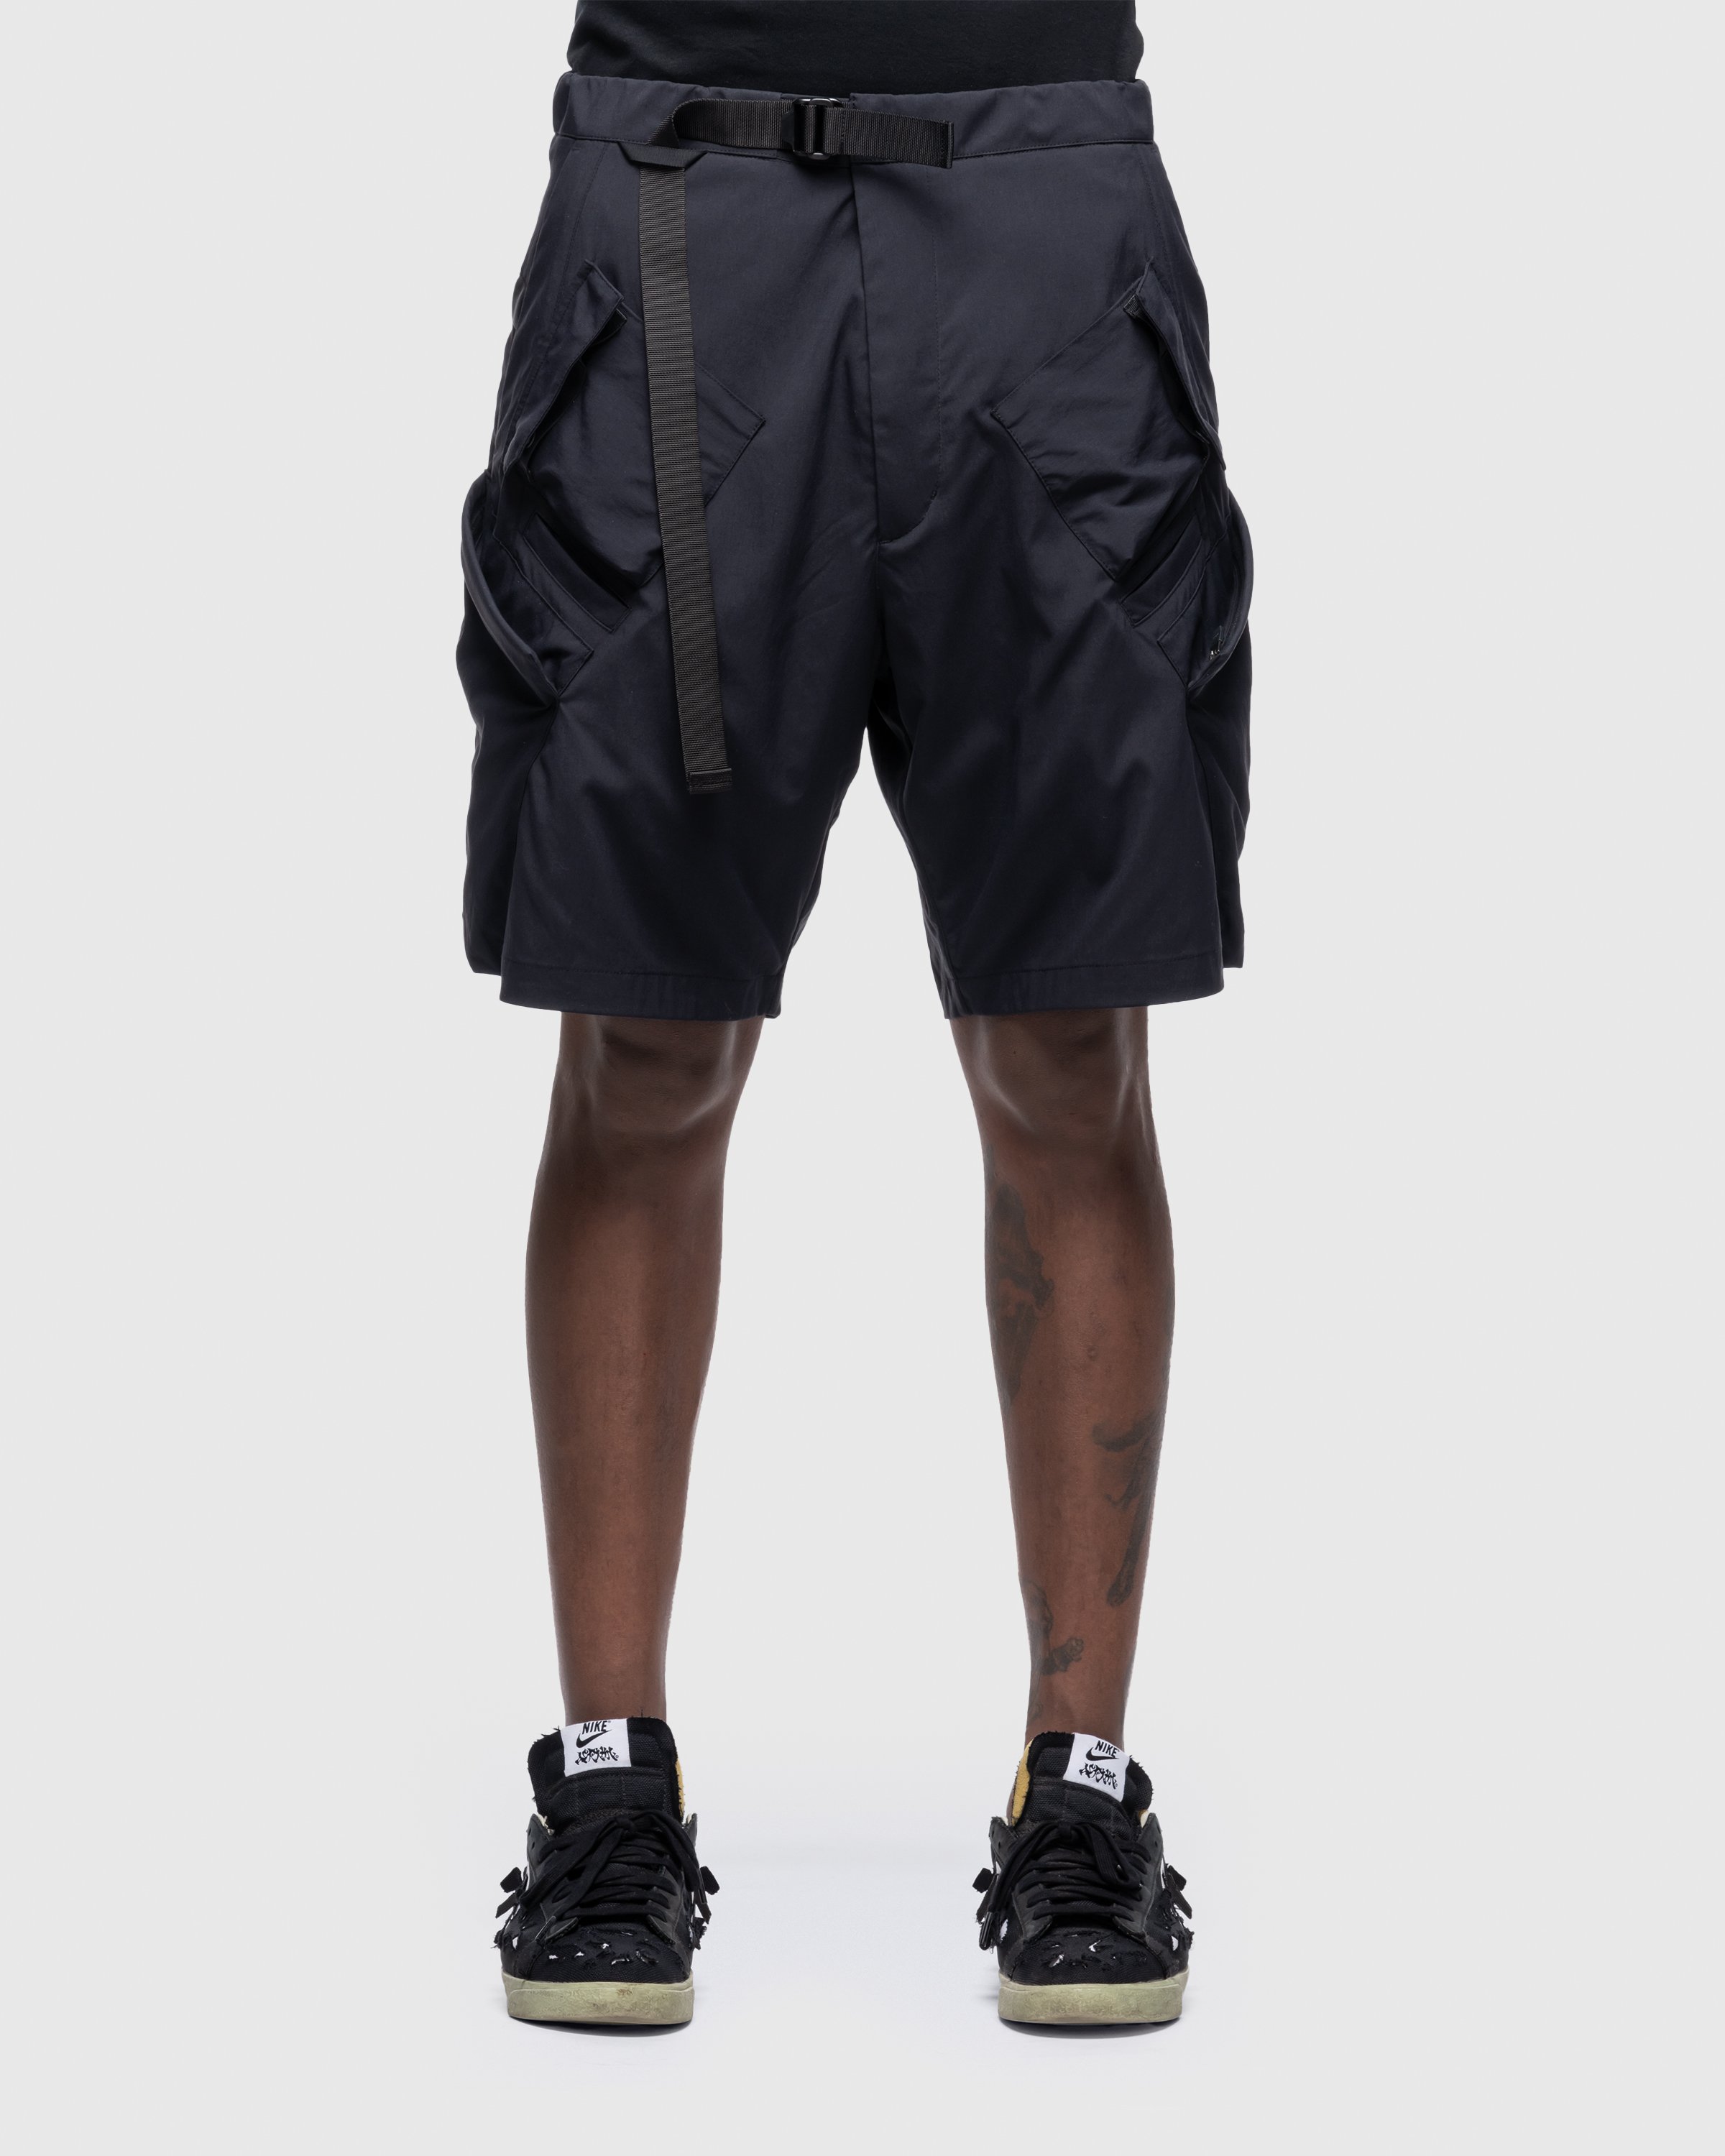 ACRONYM - SP29-M Nylon Stretch BDU Shorts Black - Clothing - Black - Image 2